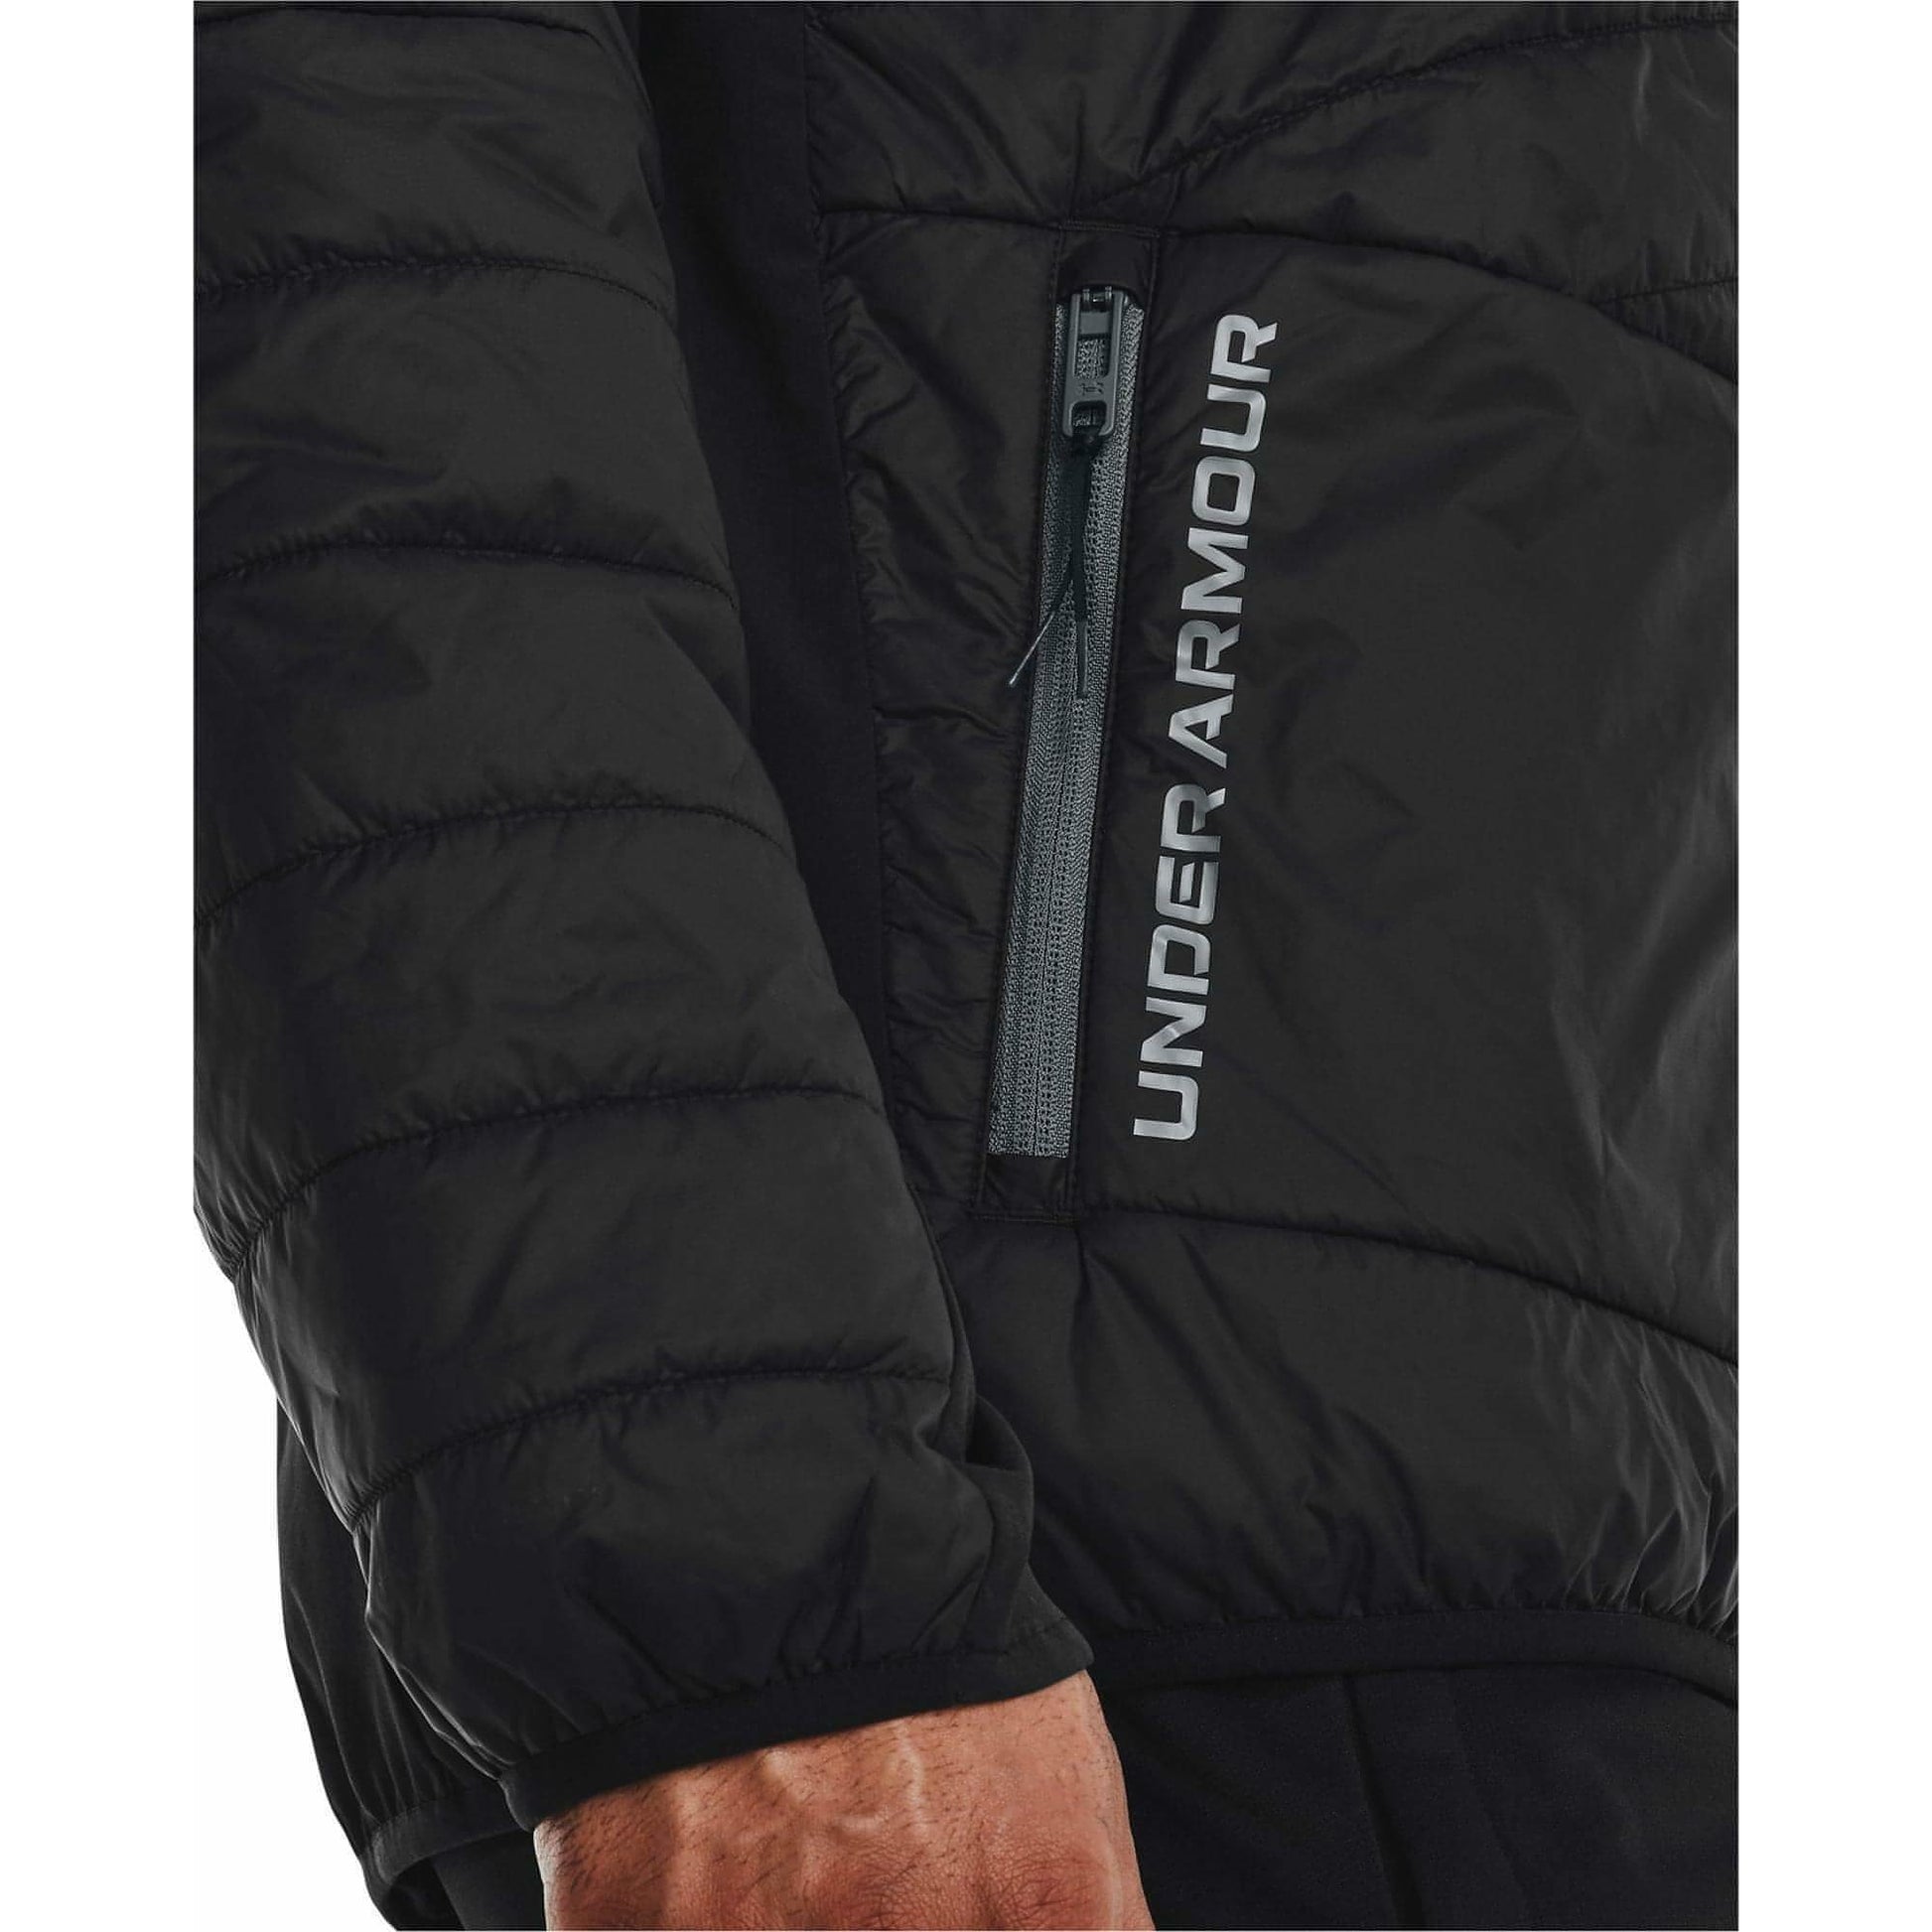 UNDER ARMOUR Women's COLD GEAR REACTOR Insulator Jacket - Black